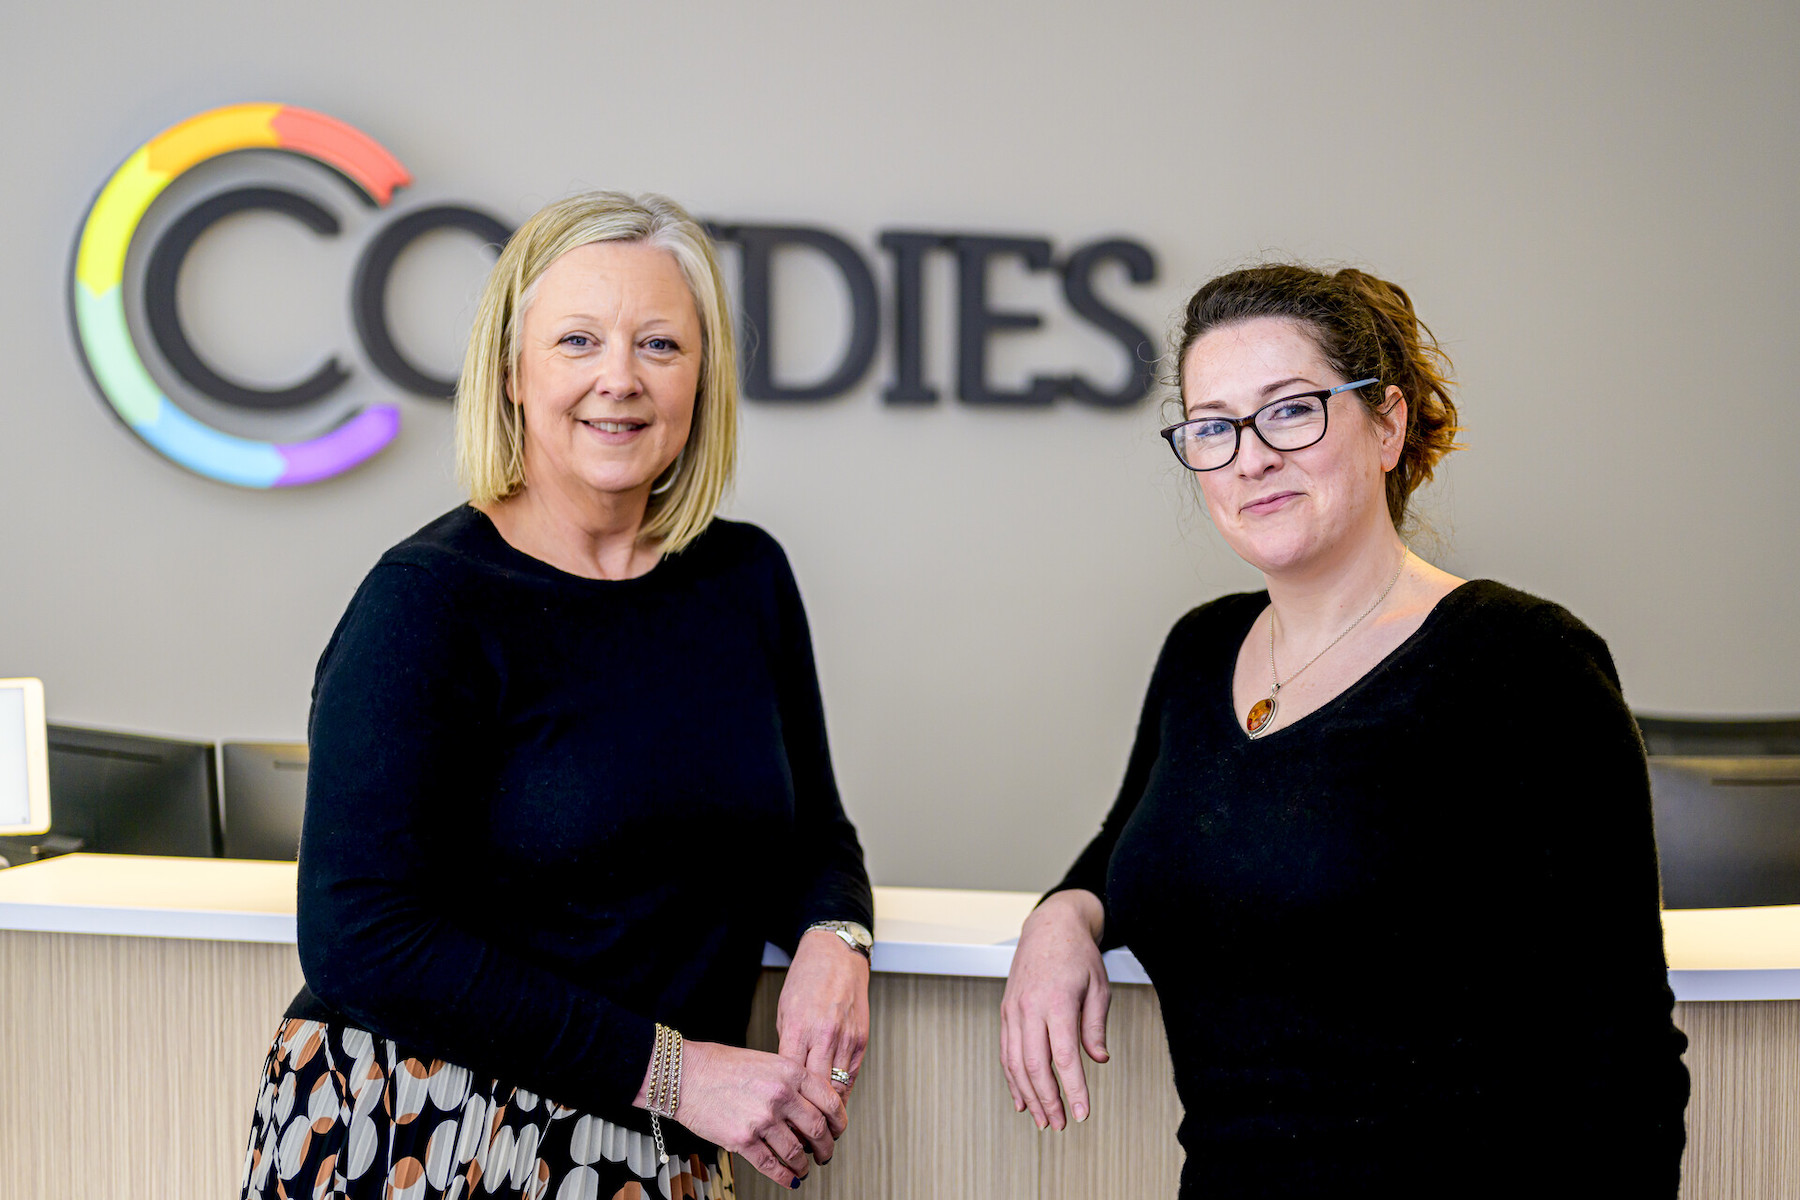 Tax expert Brona MacDougall joins Condies as tax director